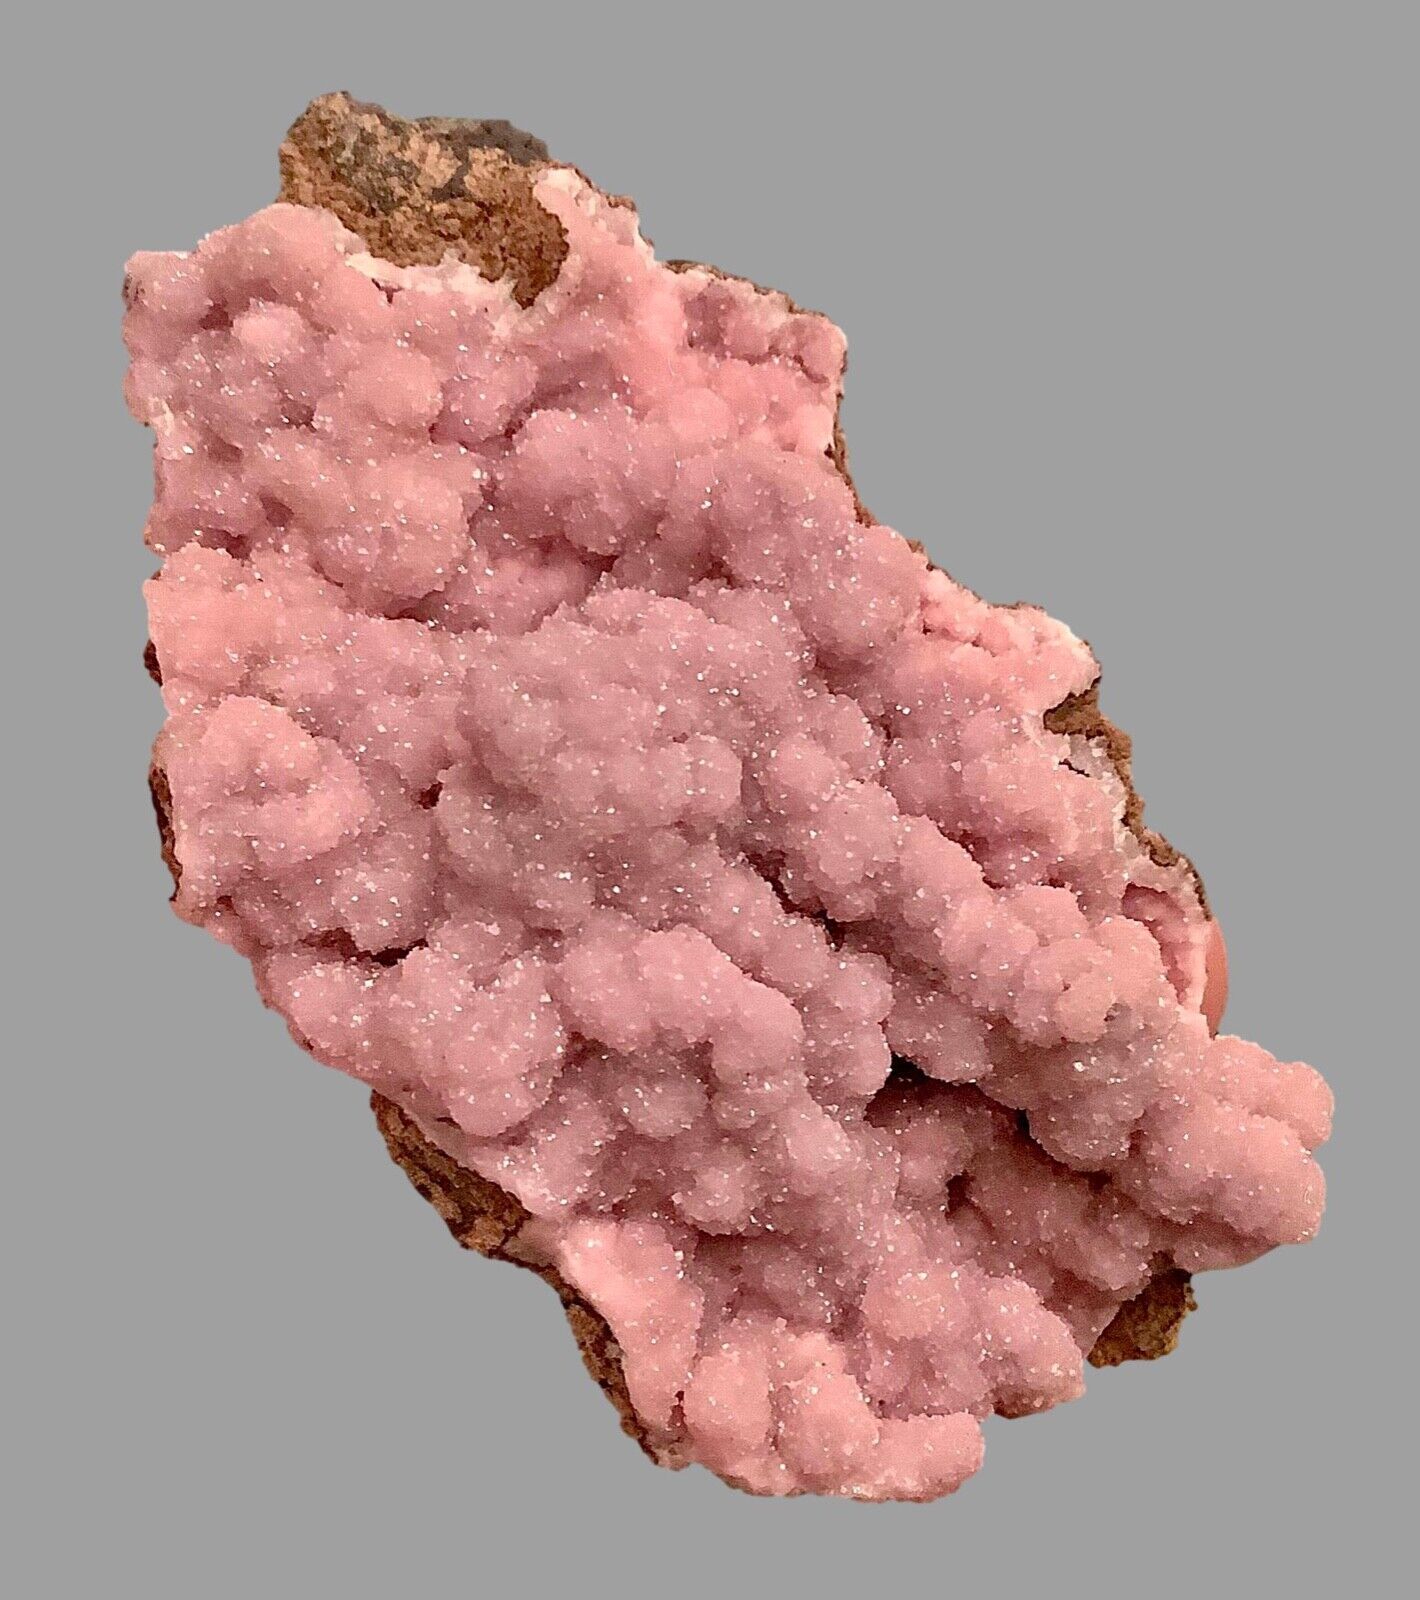 Sparkling Pale-Pink RHODOCHROSITE, N’Chwaning Mines, South Africa